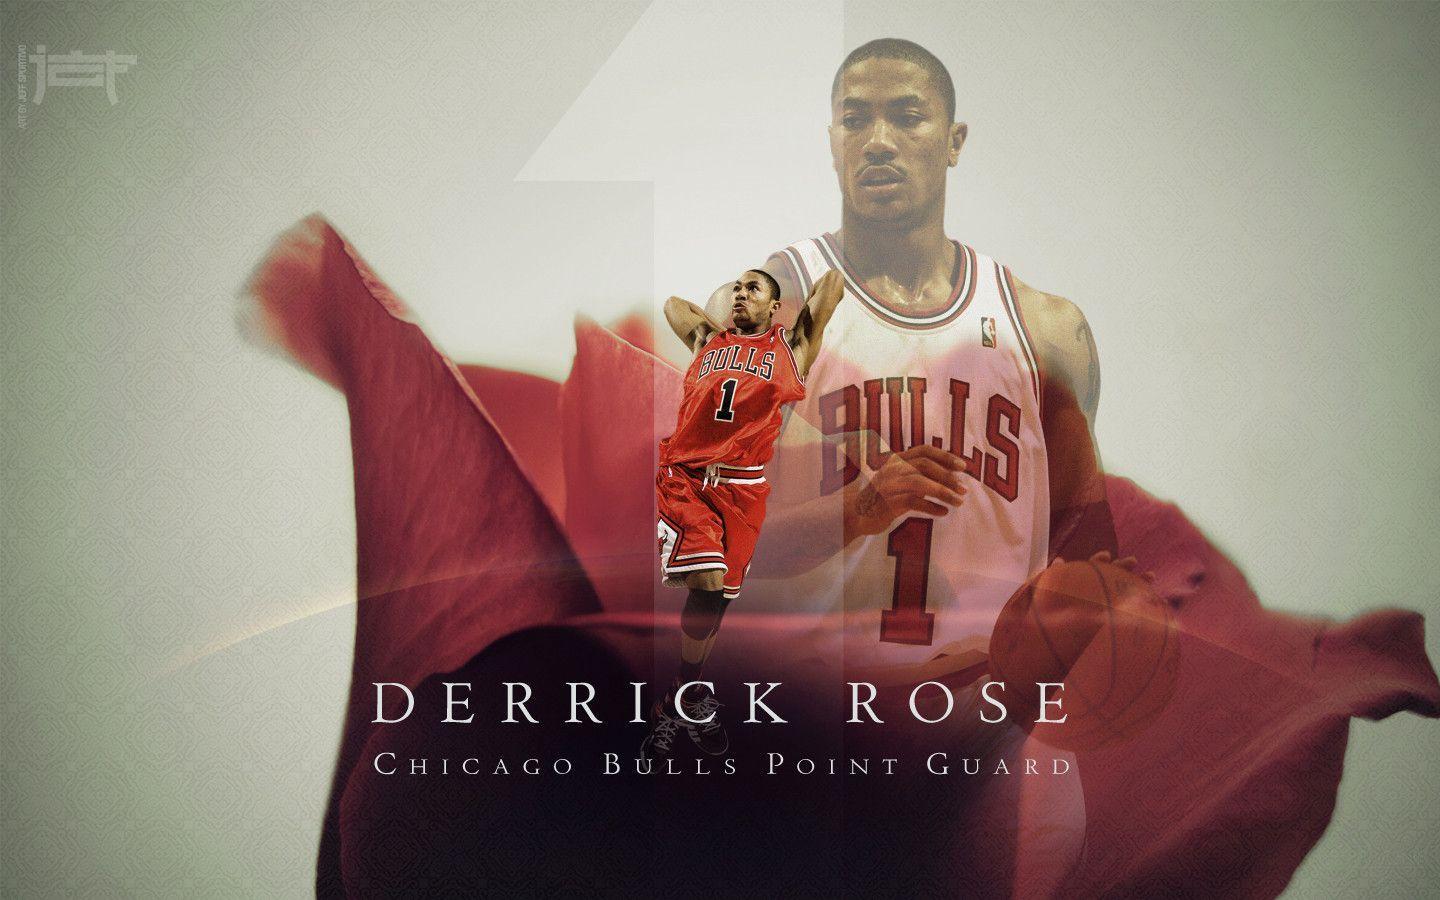 Derrick Rose. High Definition Wallpaper, High Definition Picture